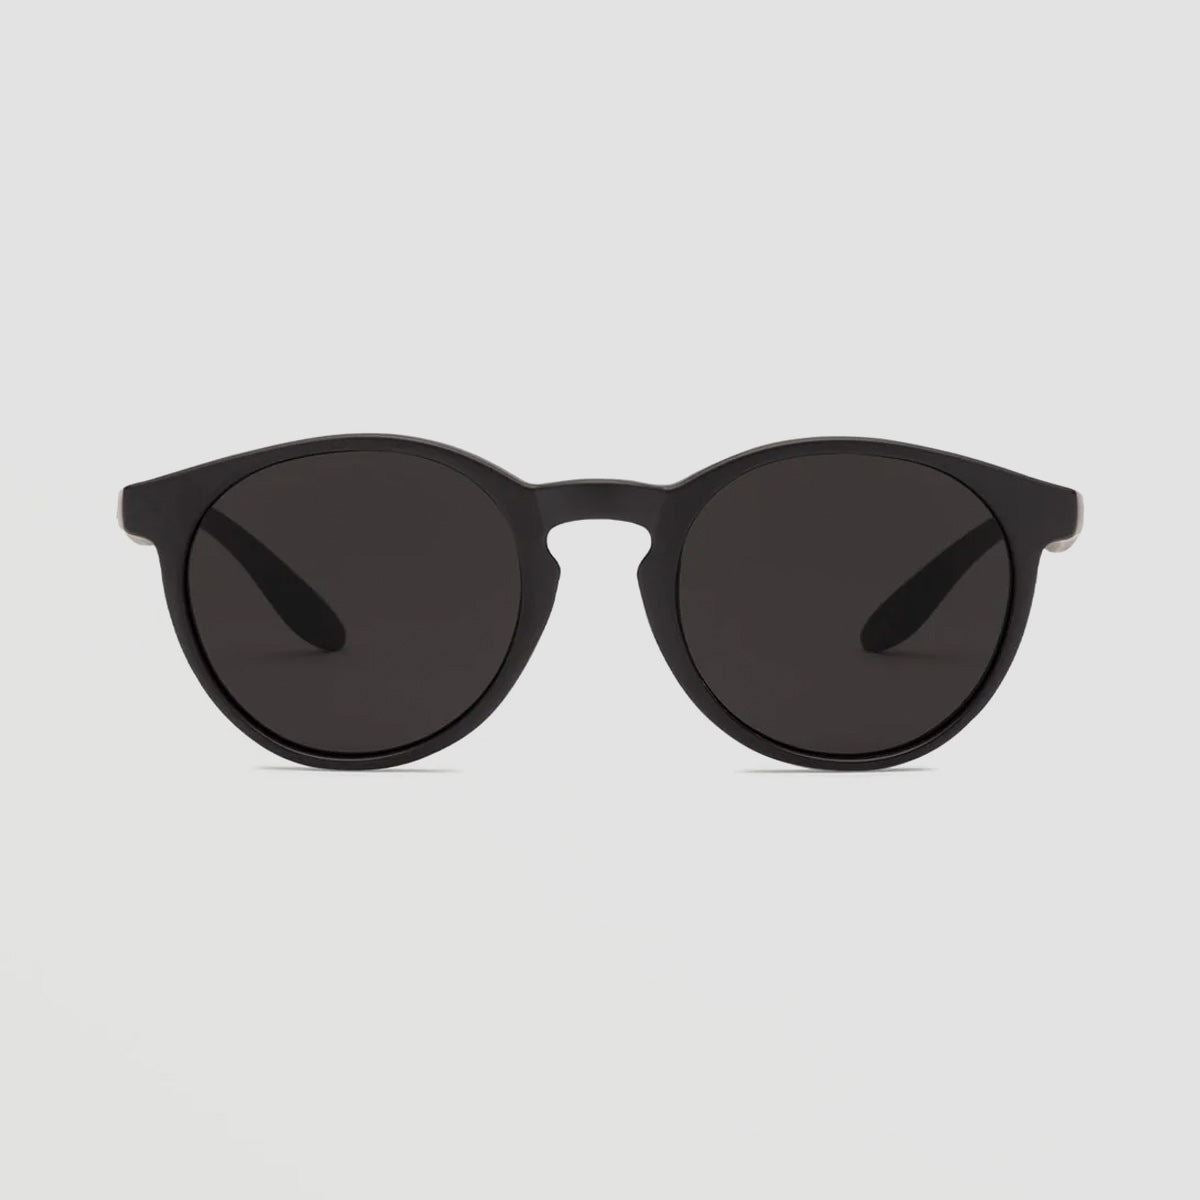 Volcom Subject Sunglasses Matte Black/Grey - Unisex